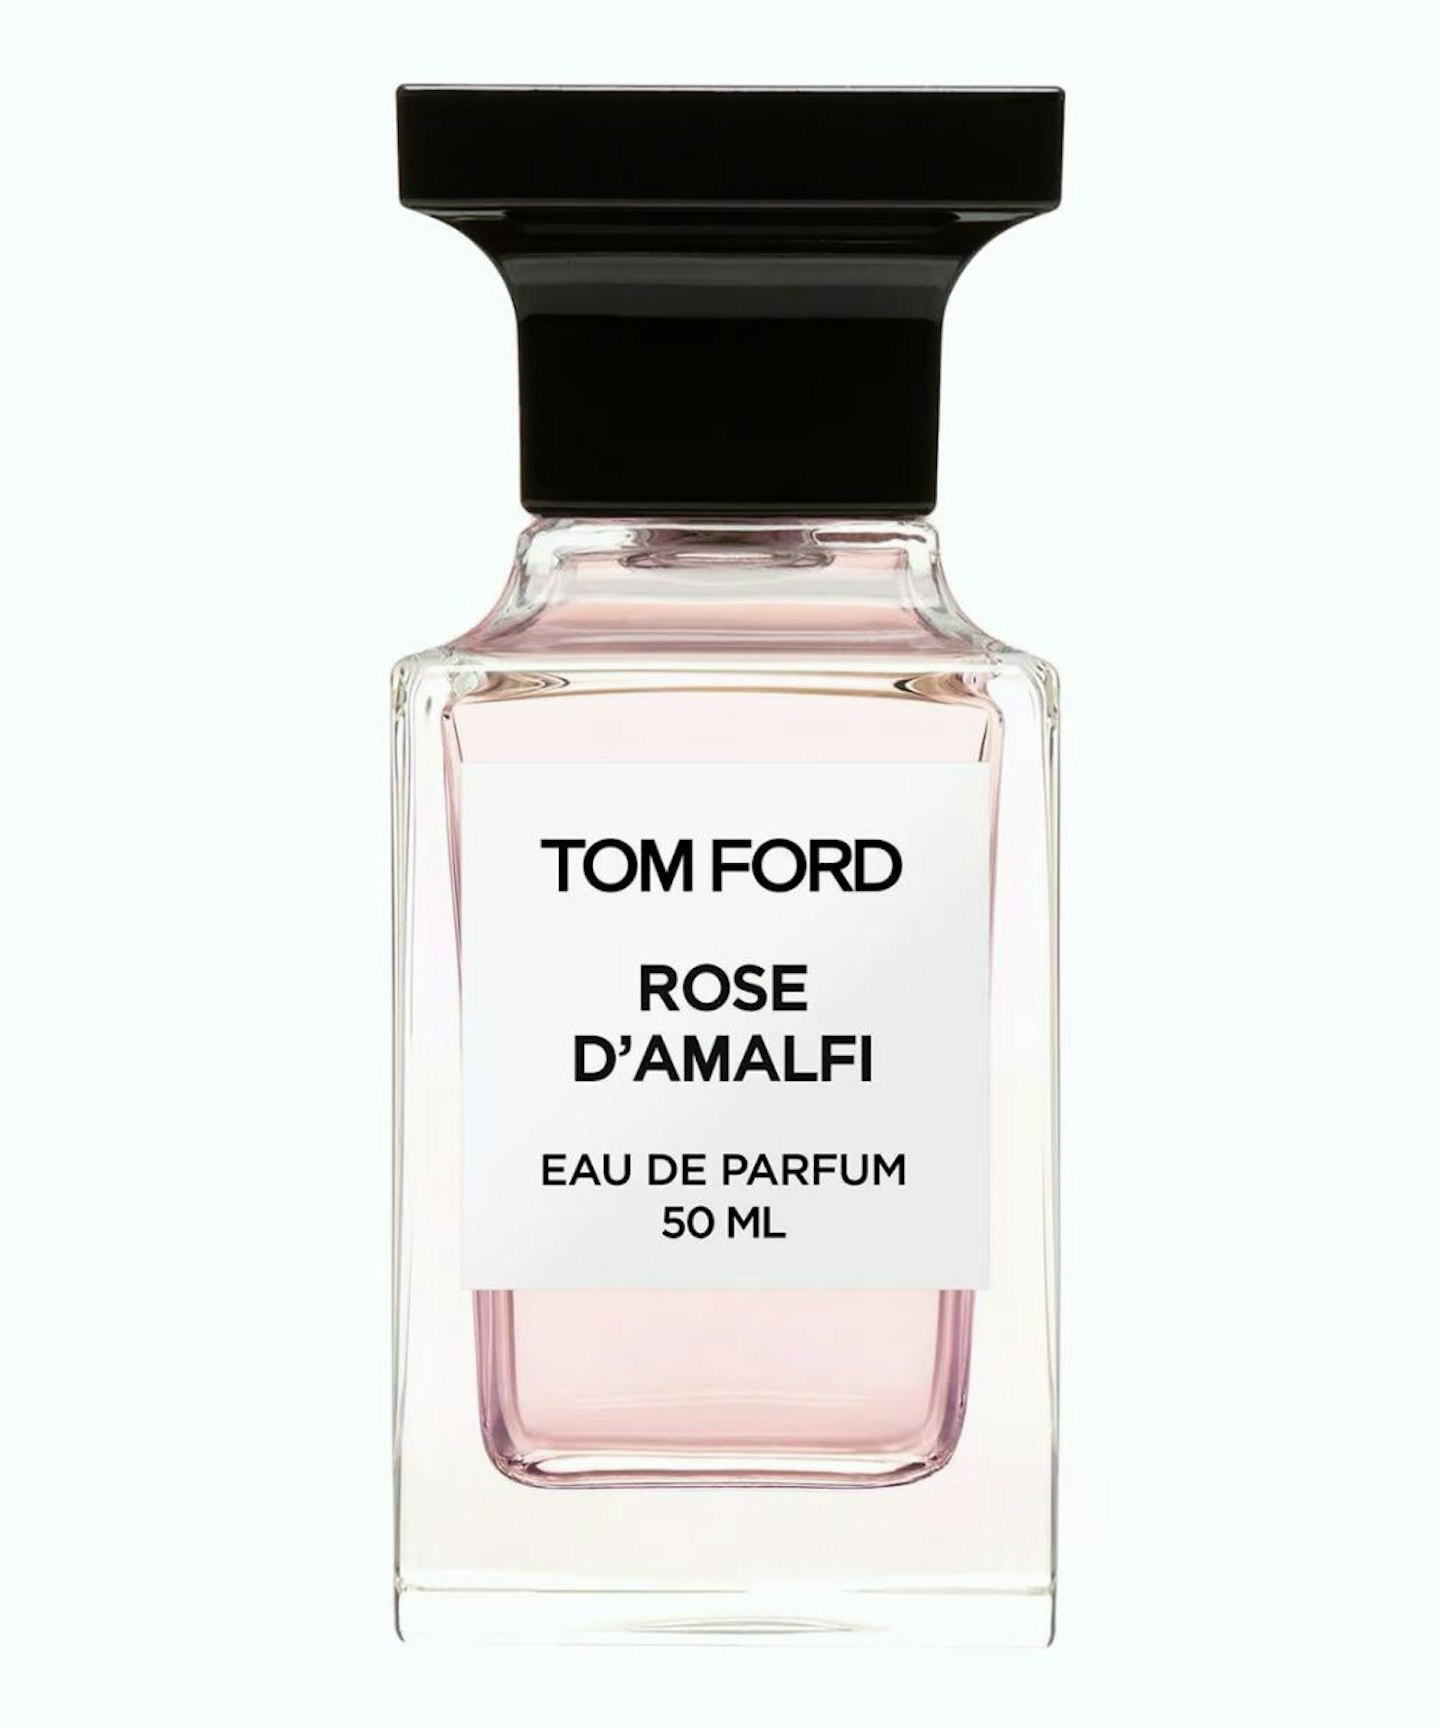 Tom Ford Rose D'Amalfi Eau de Parfum 50ml 